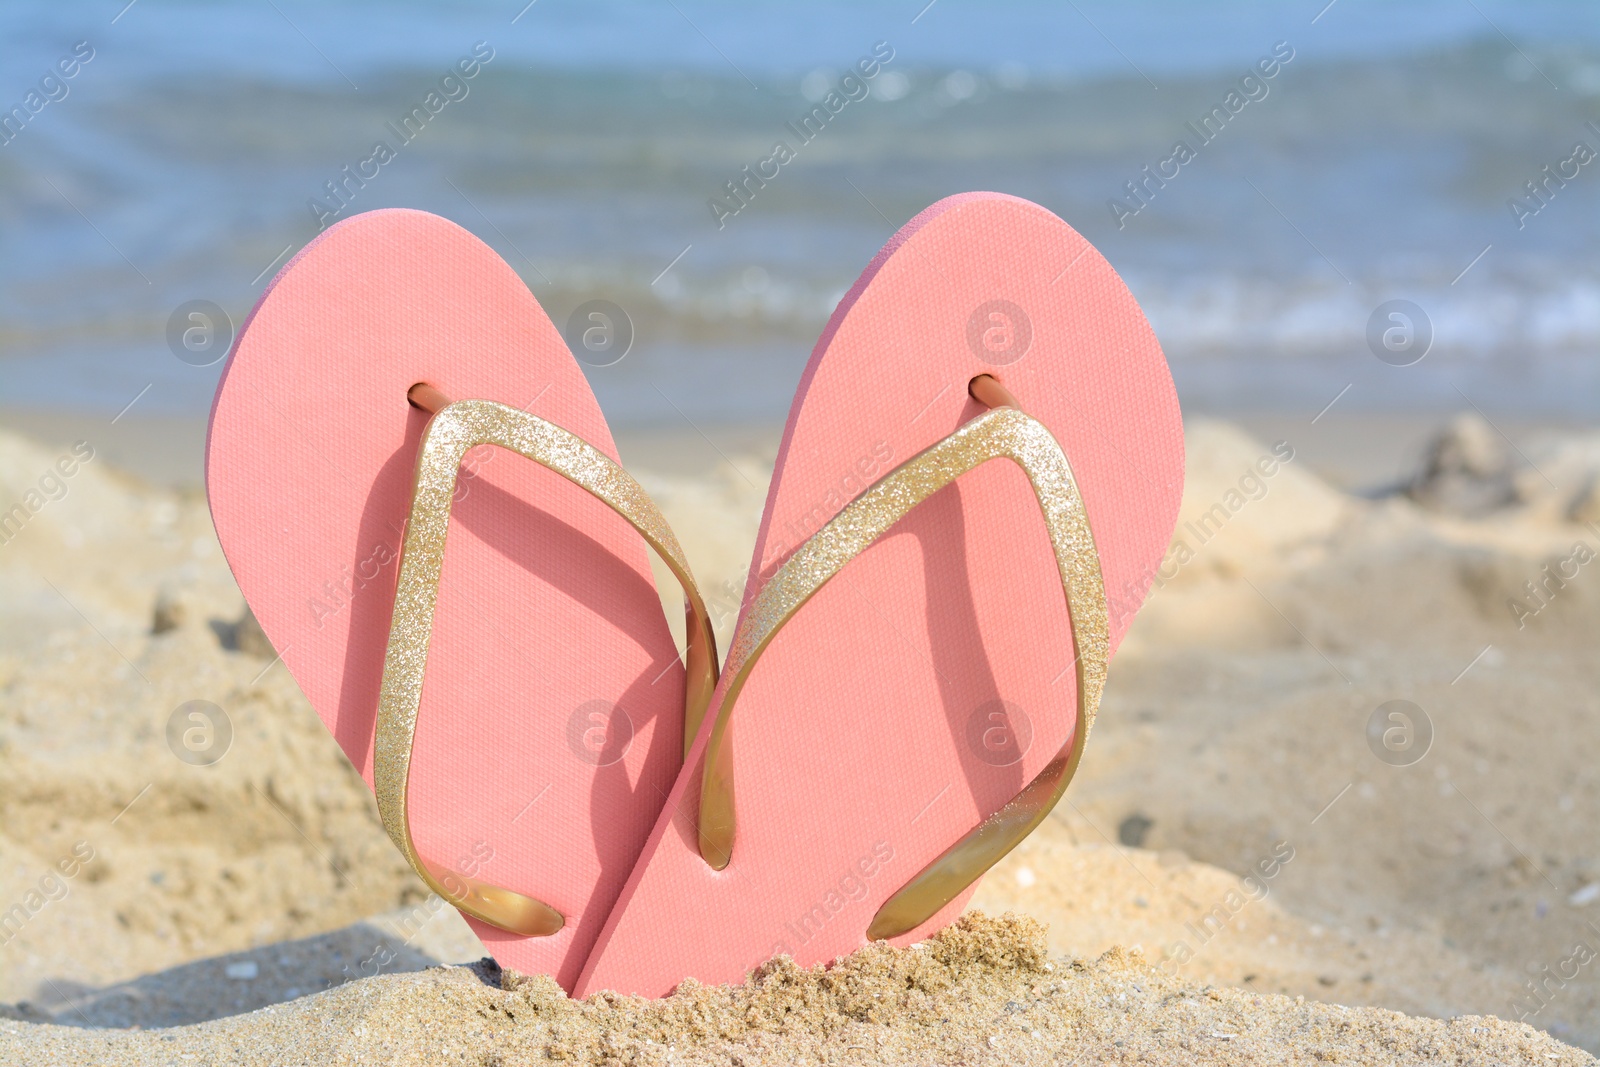 Photo of Stylish flip flops in sand on beach near sea